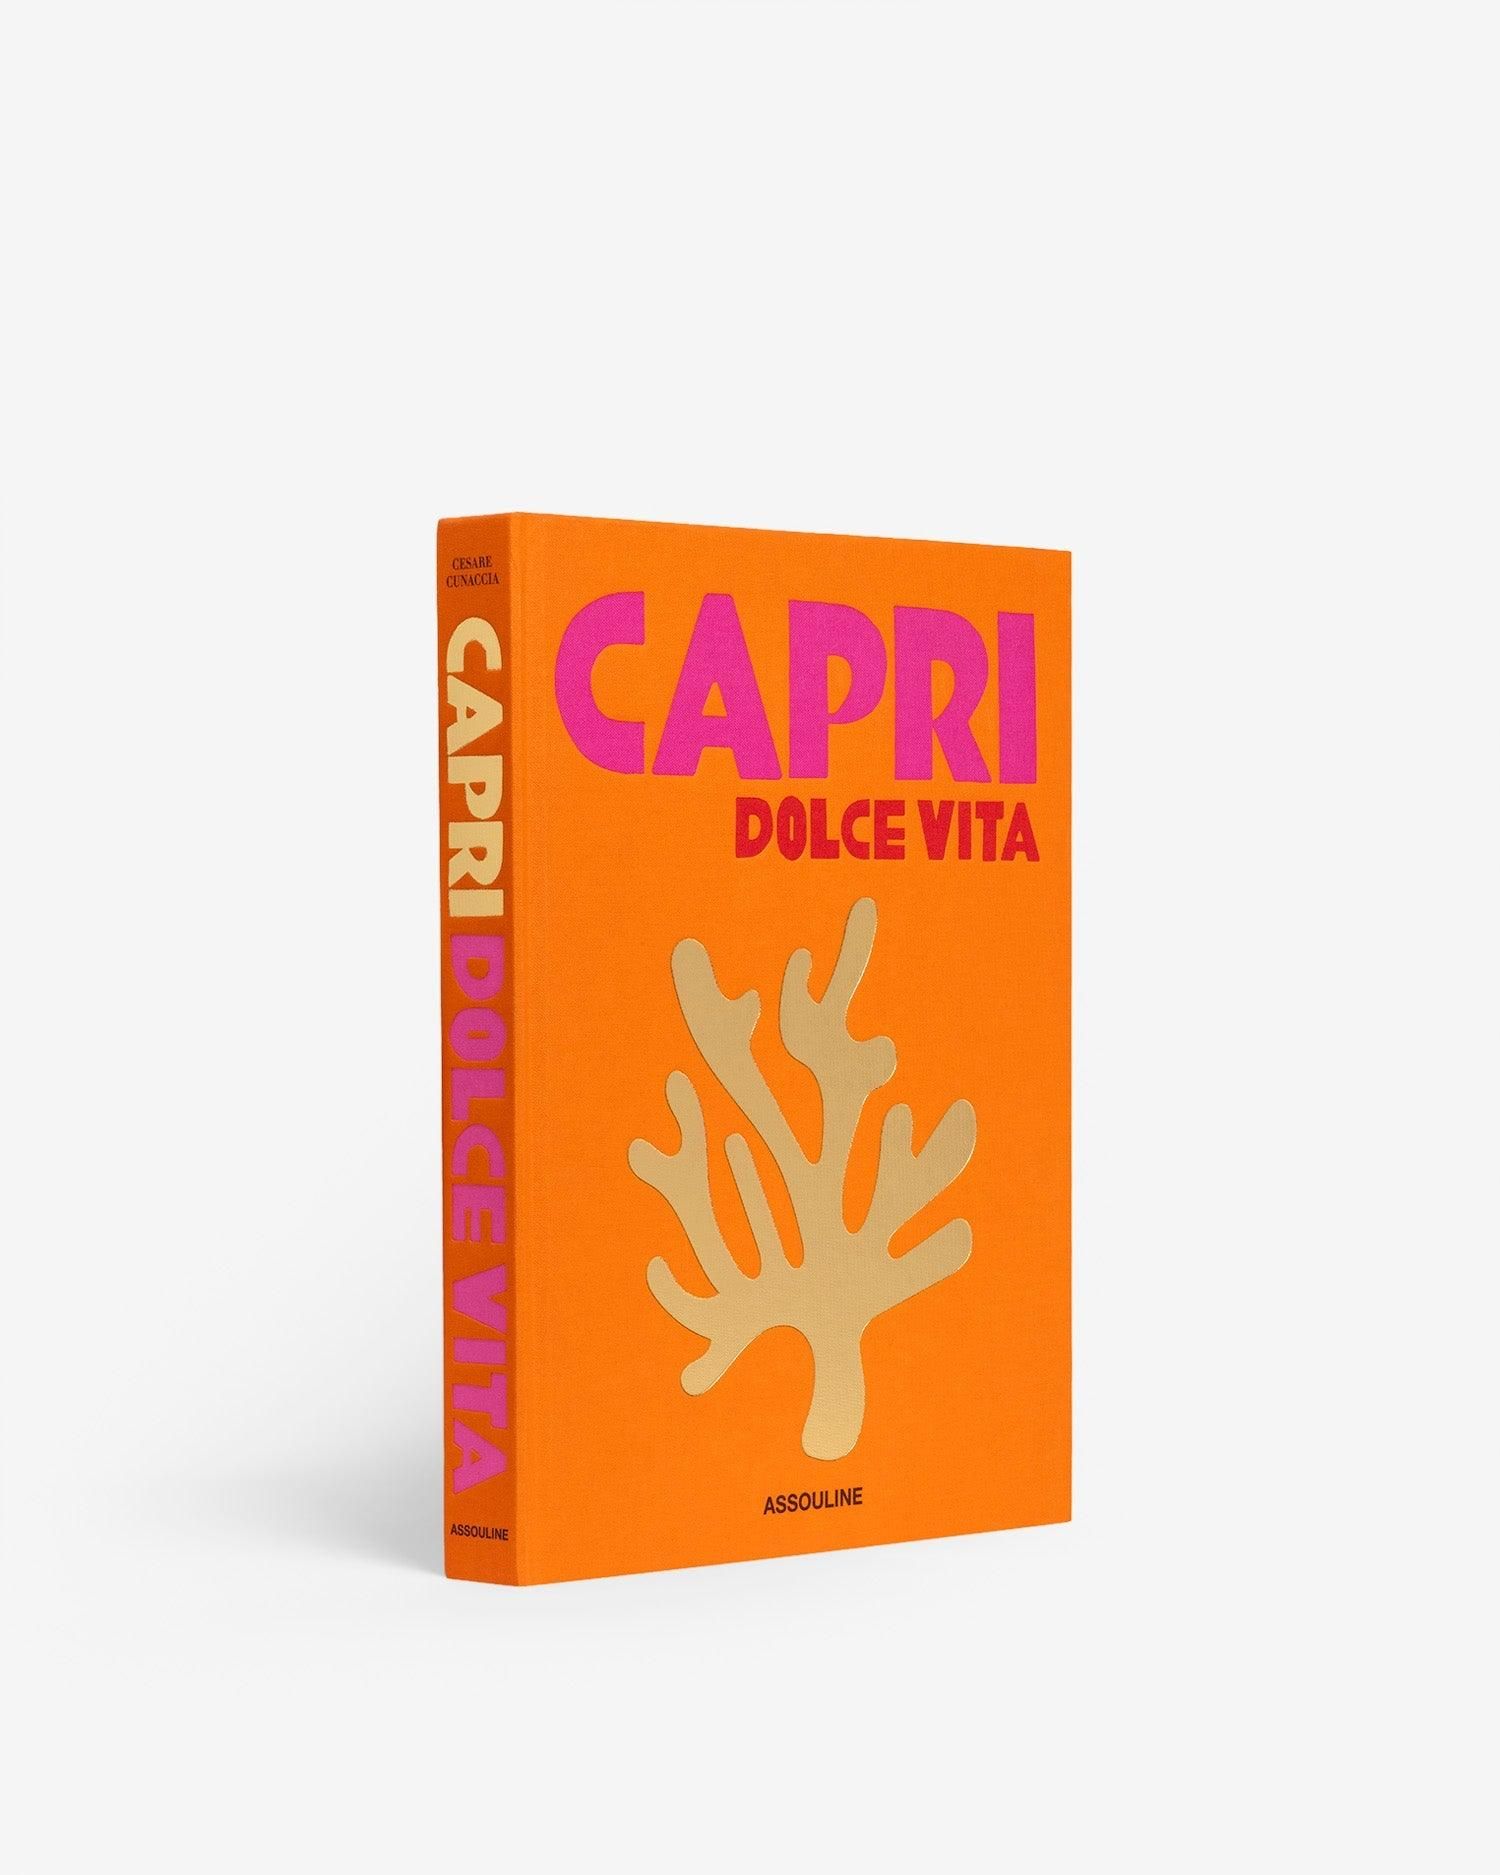 Capri Dolce Vita by Cesare Cunaccia - Coffee Table Book | ASSOULINE | Assouline